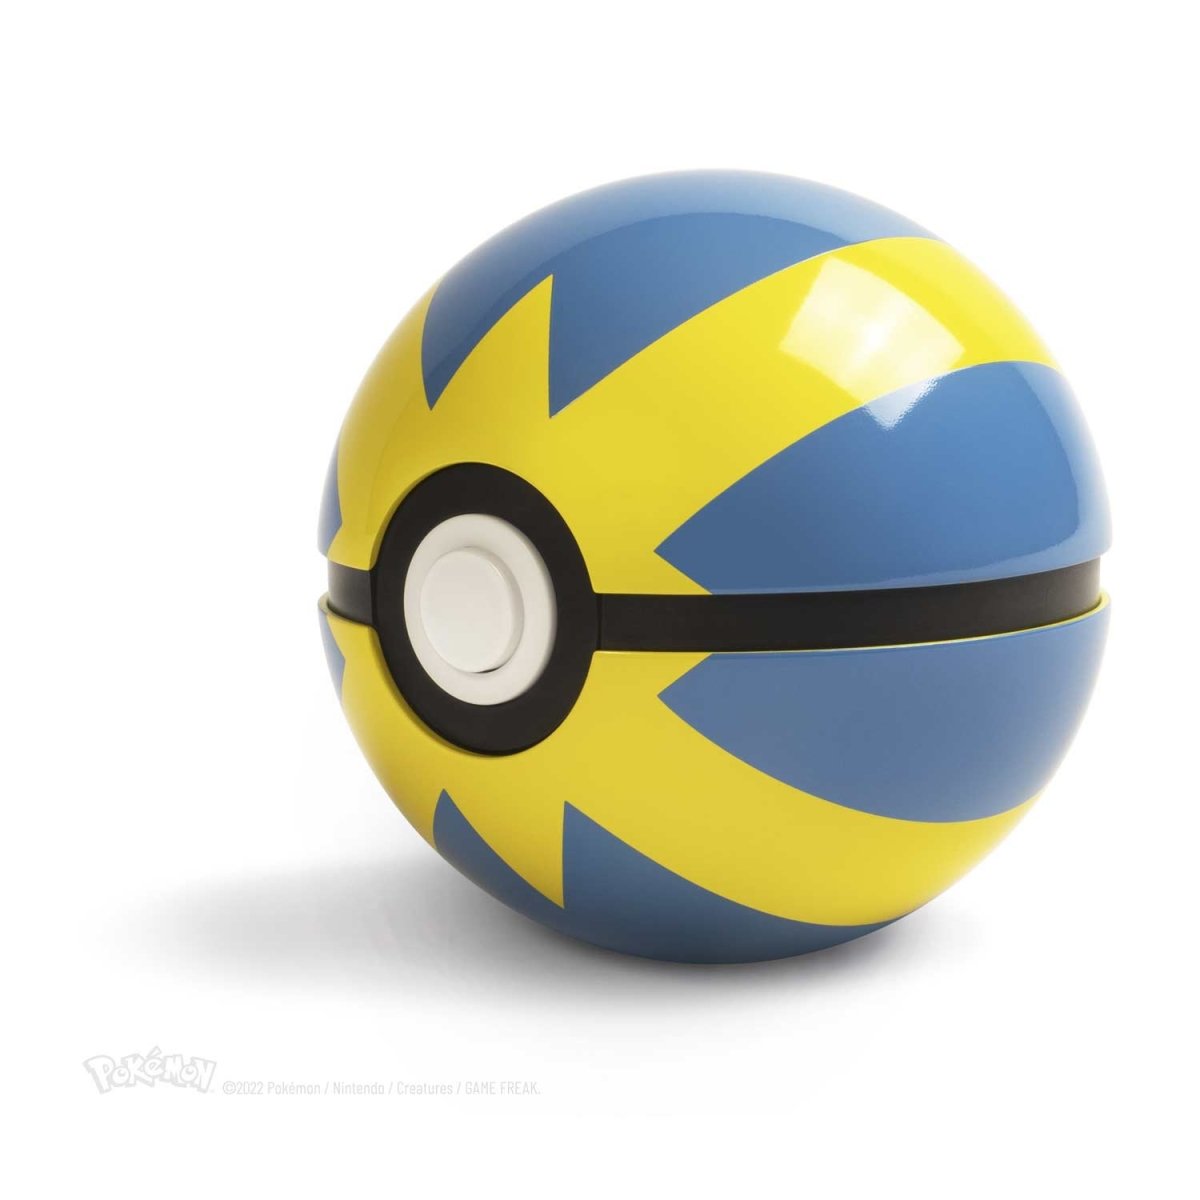 Buy Your Pokemon Poke Ball Replica (Free Shipping) - Merchoid